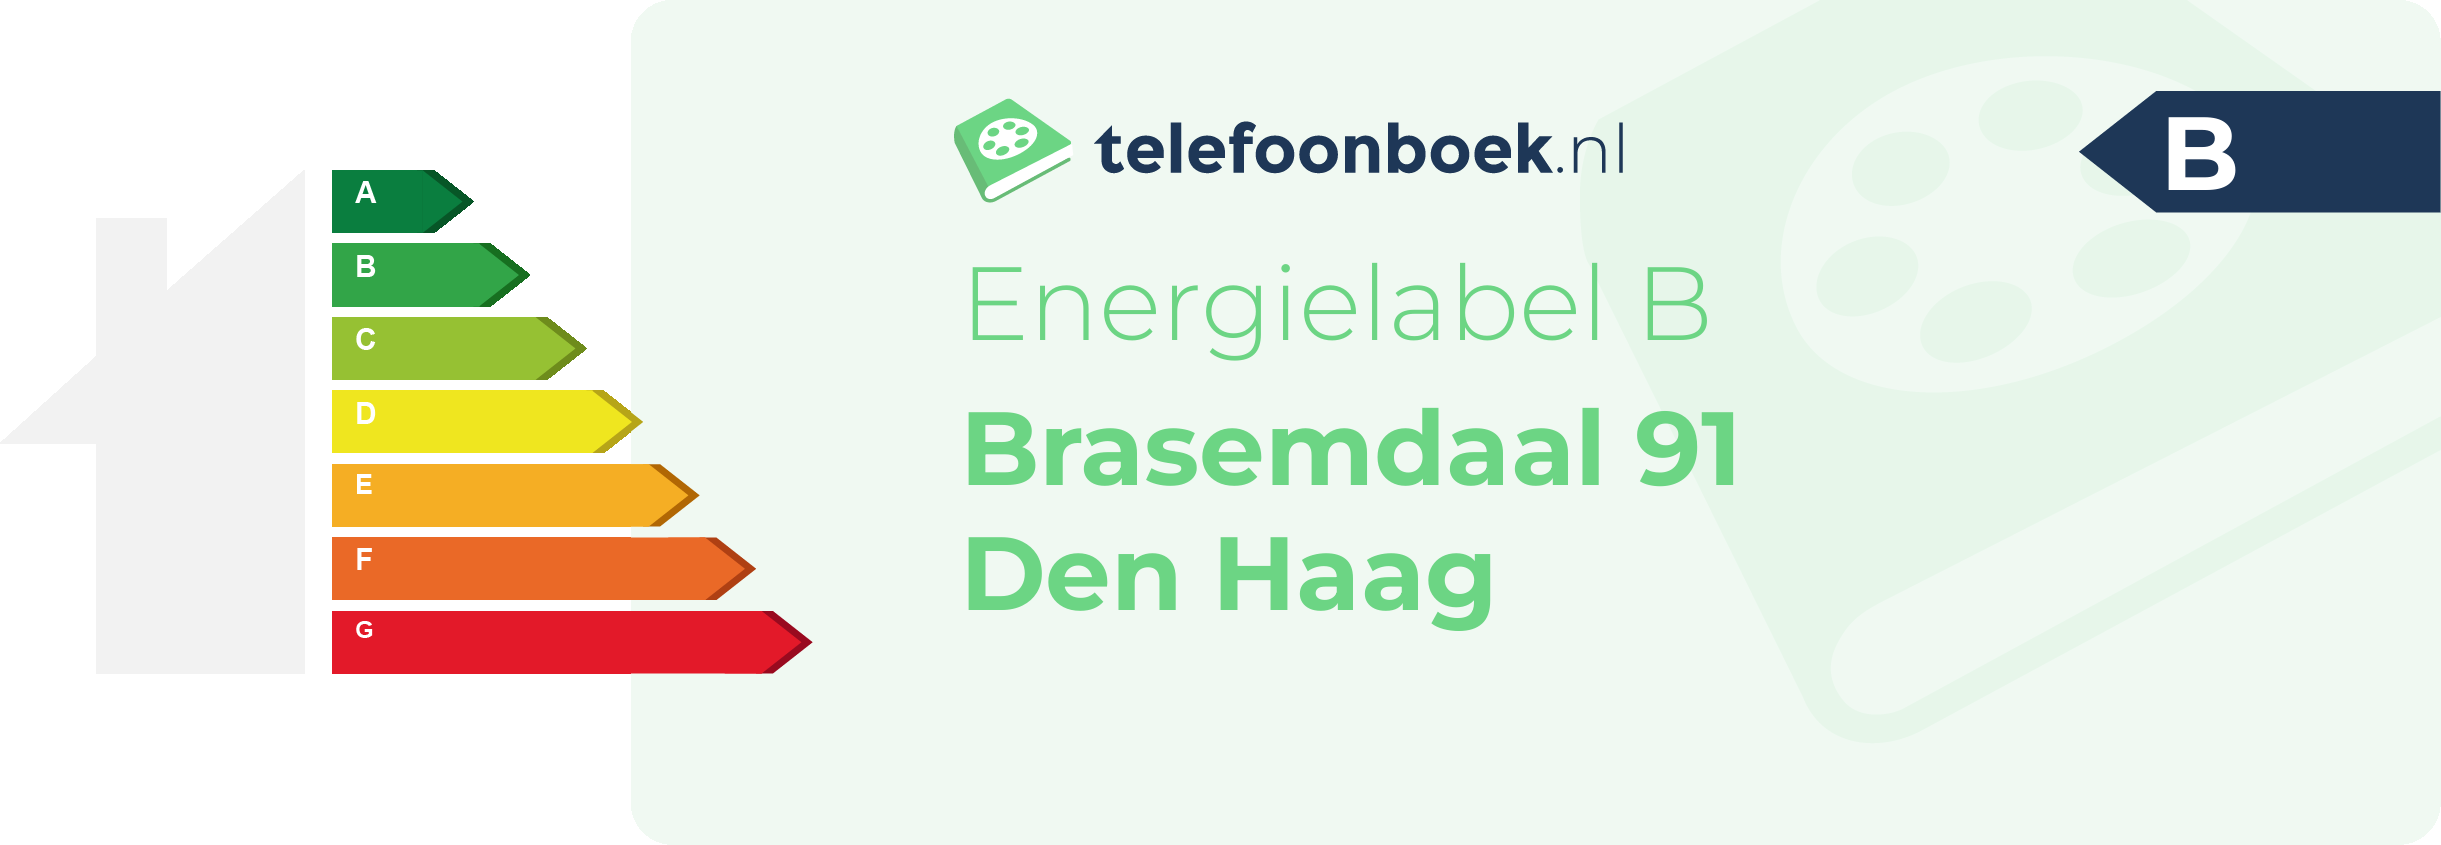 Energielabel Brasemdaal 91 Den Haag